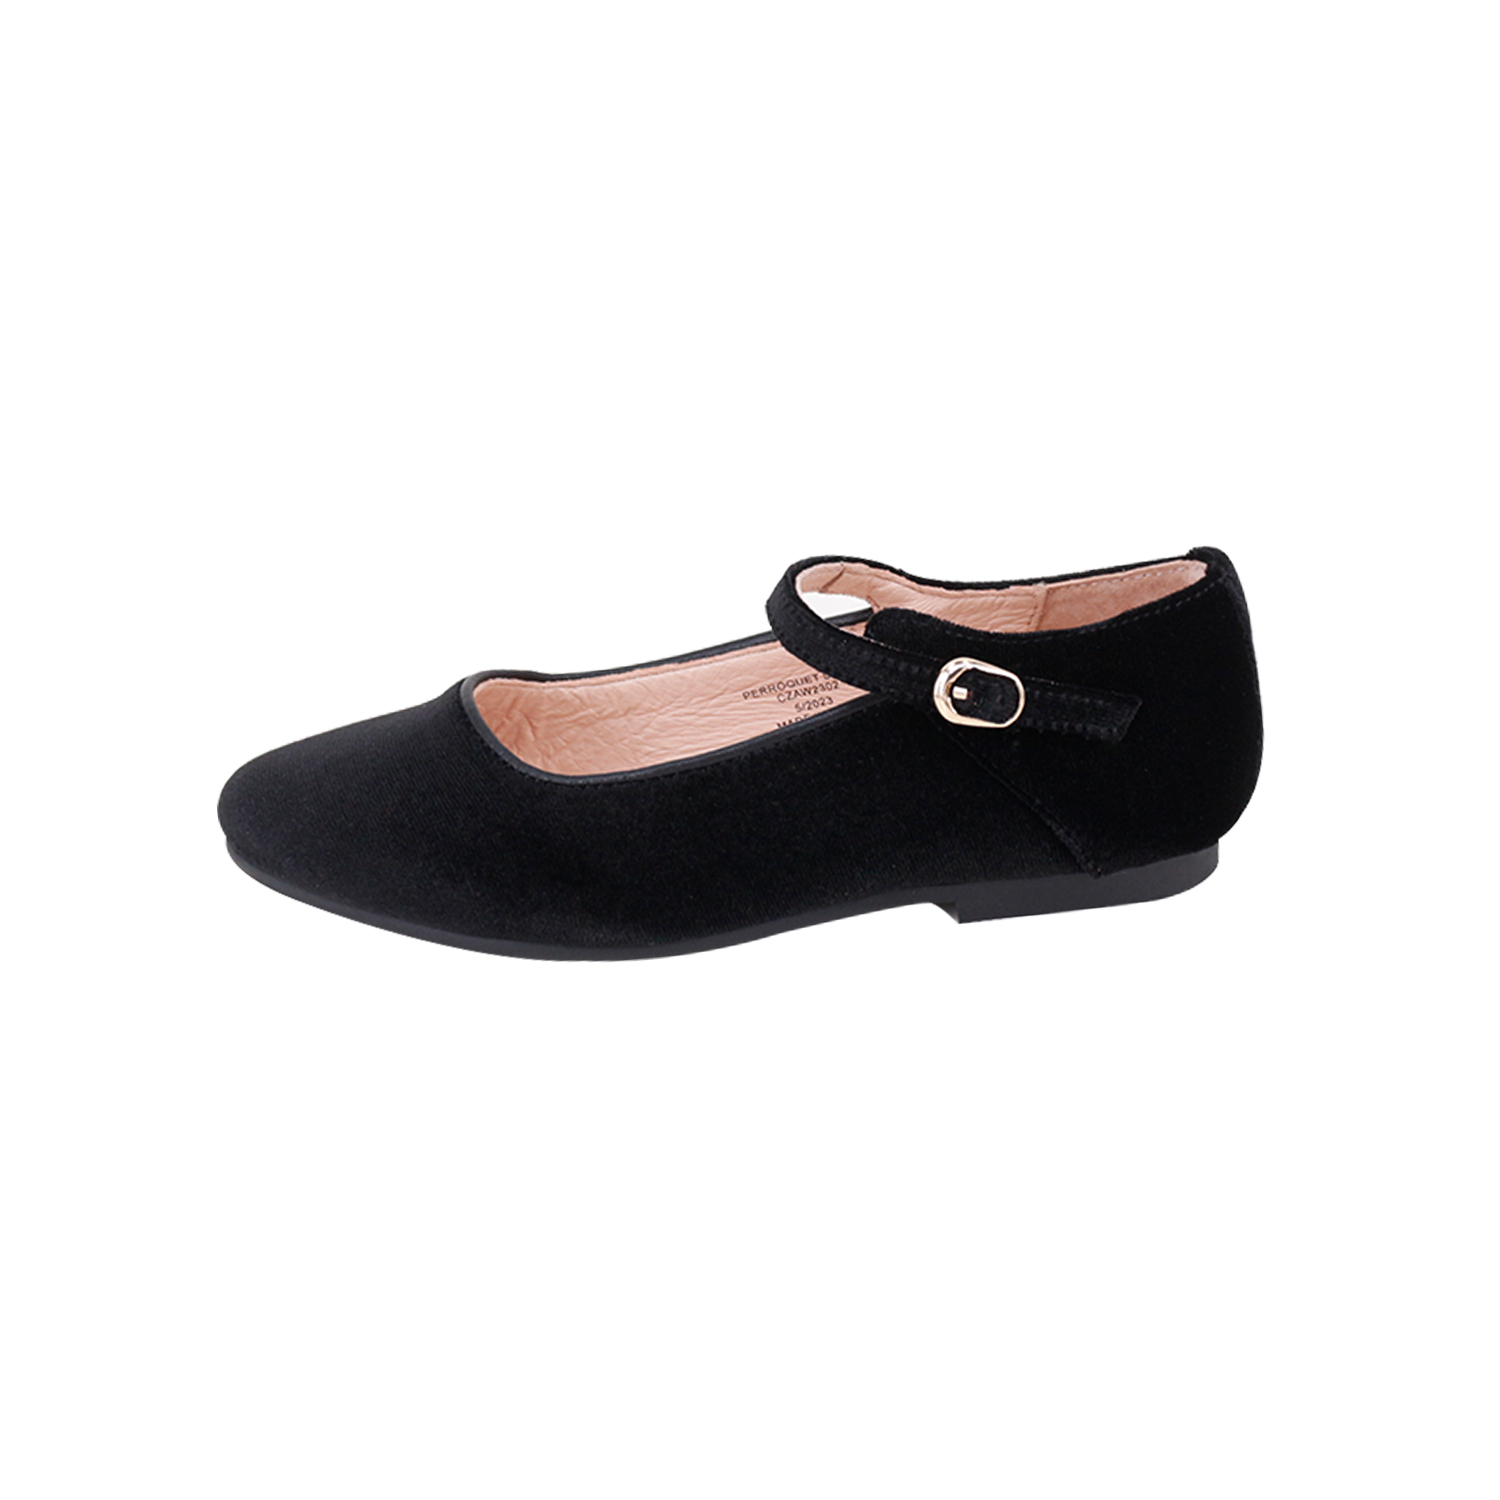 Buckle Mary Janes Black Velvet – Perroquet Shoes